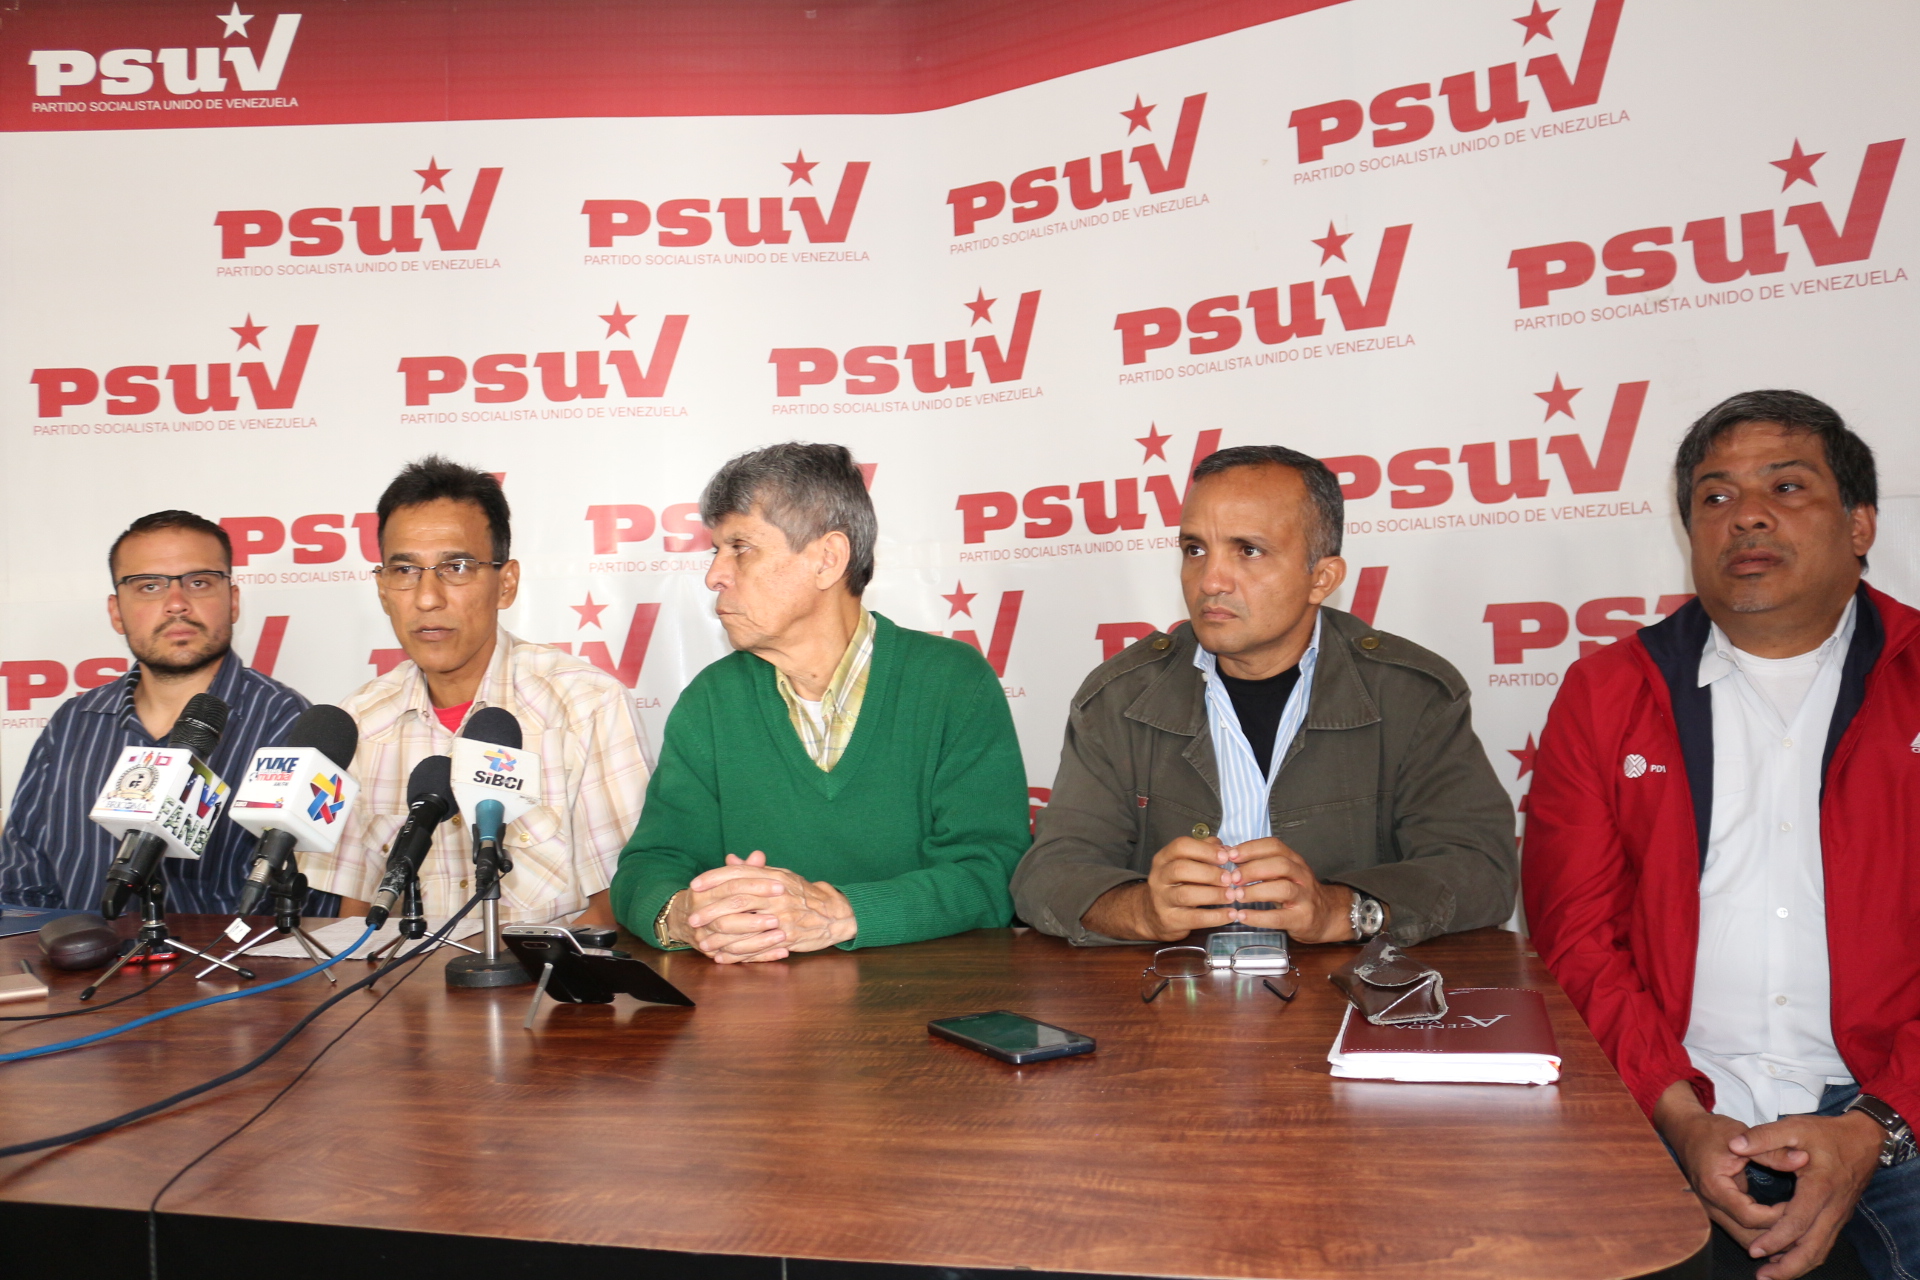 3- Equipo Político PSUV denunció plan golpista de Bonucci